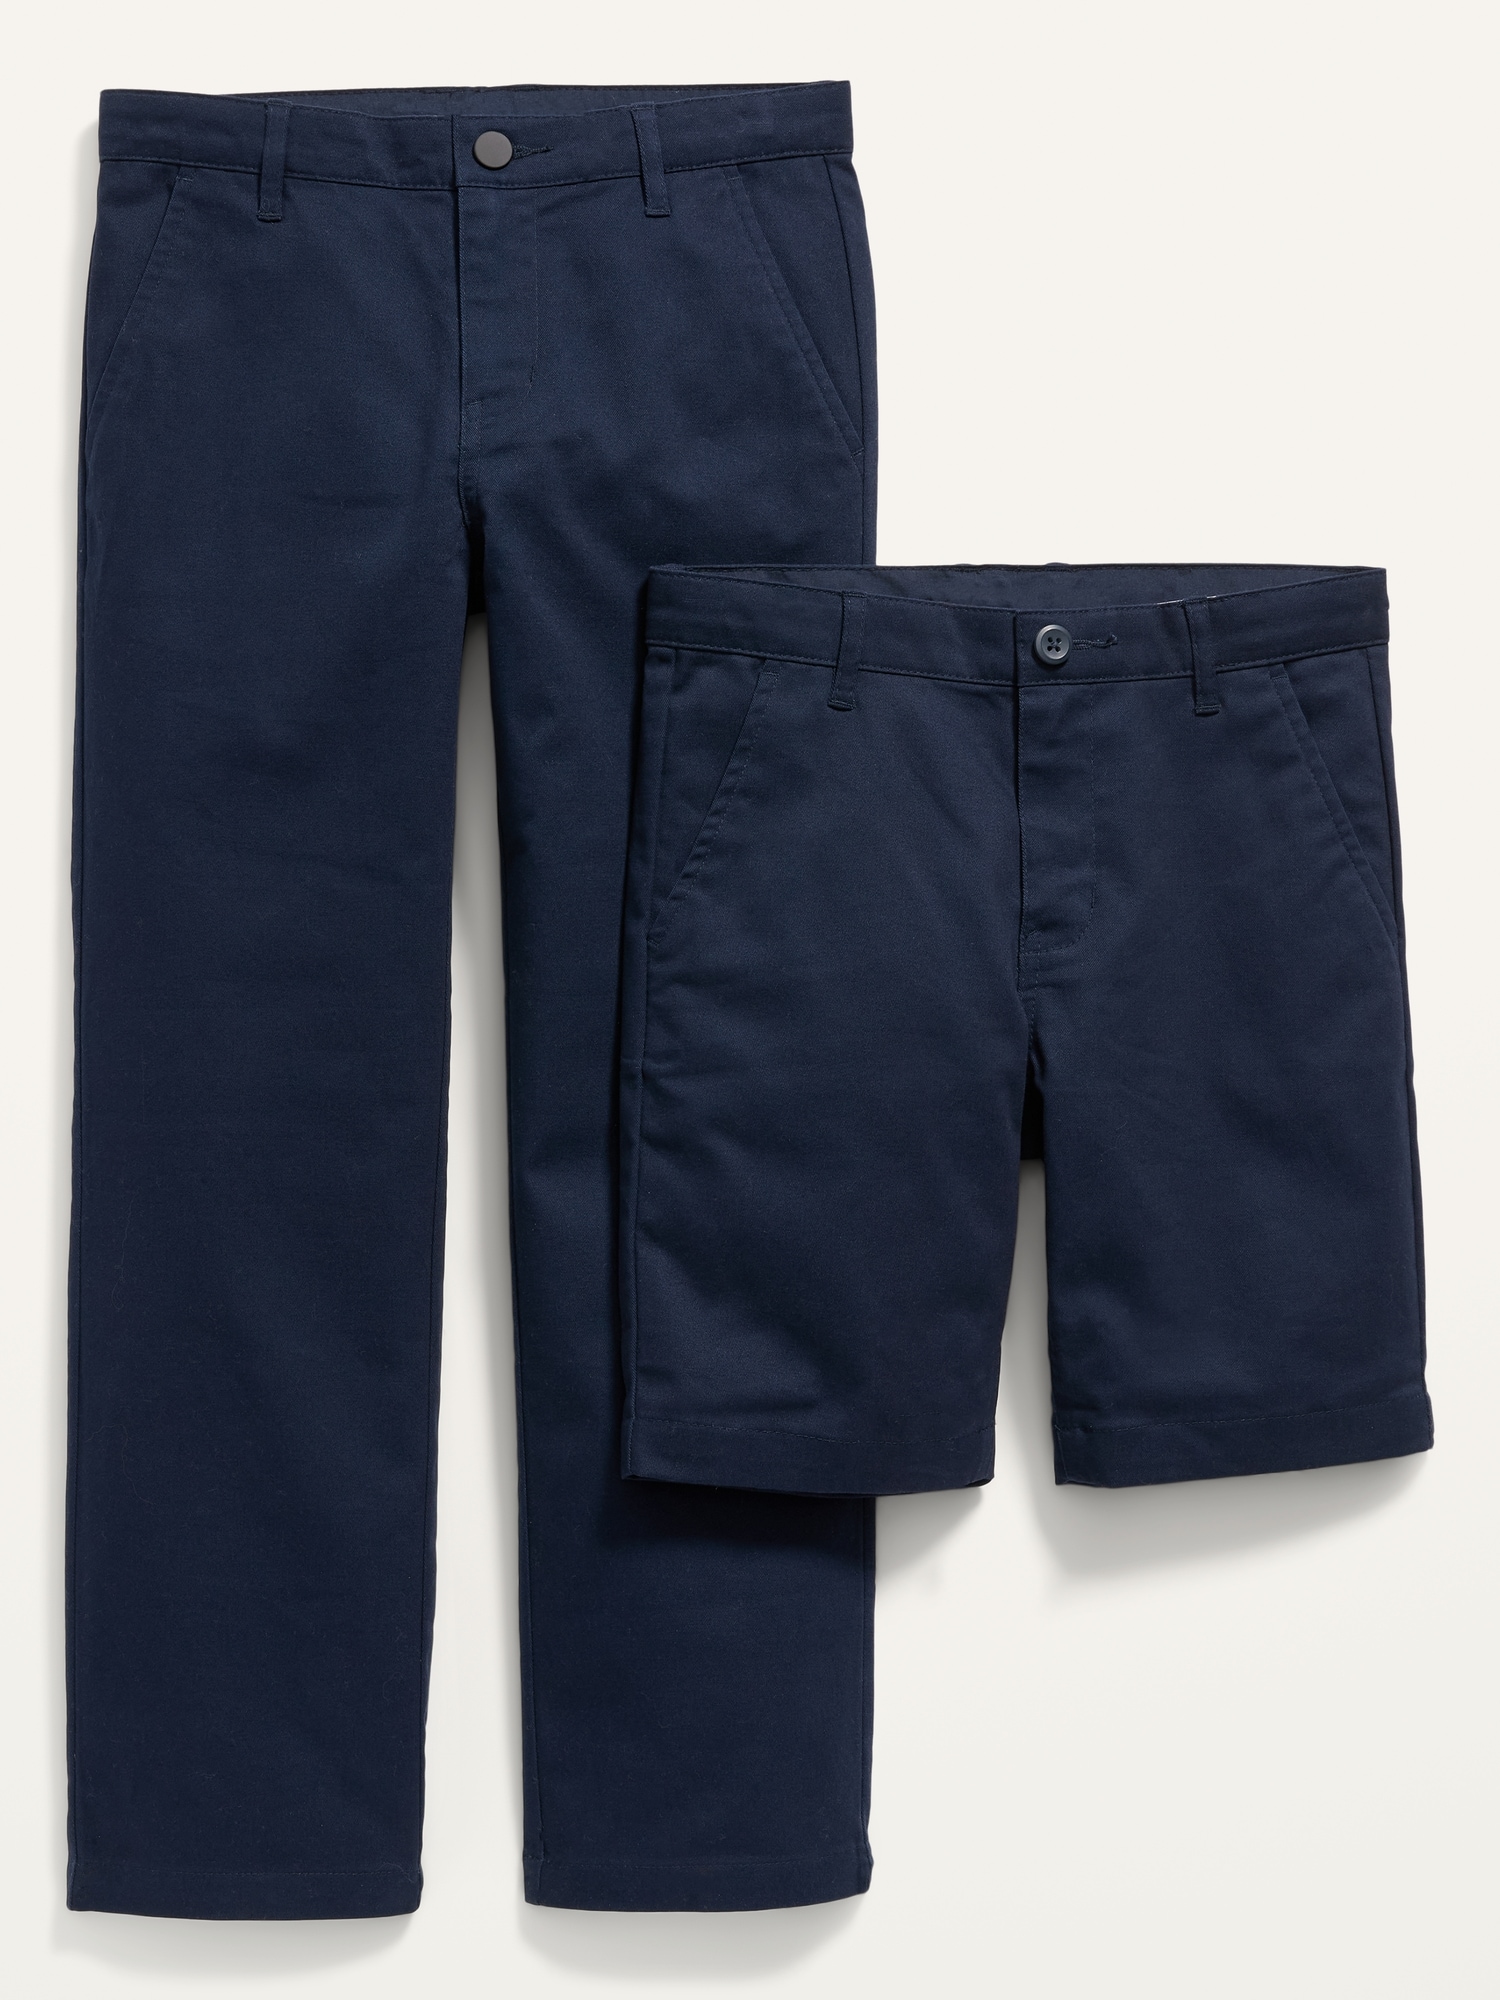 Straight Uniform Pants & Shorts Knee Length 2-Pack for Boys